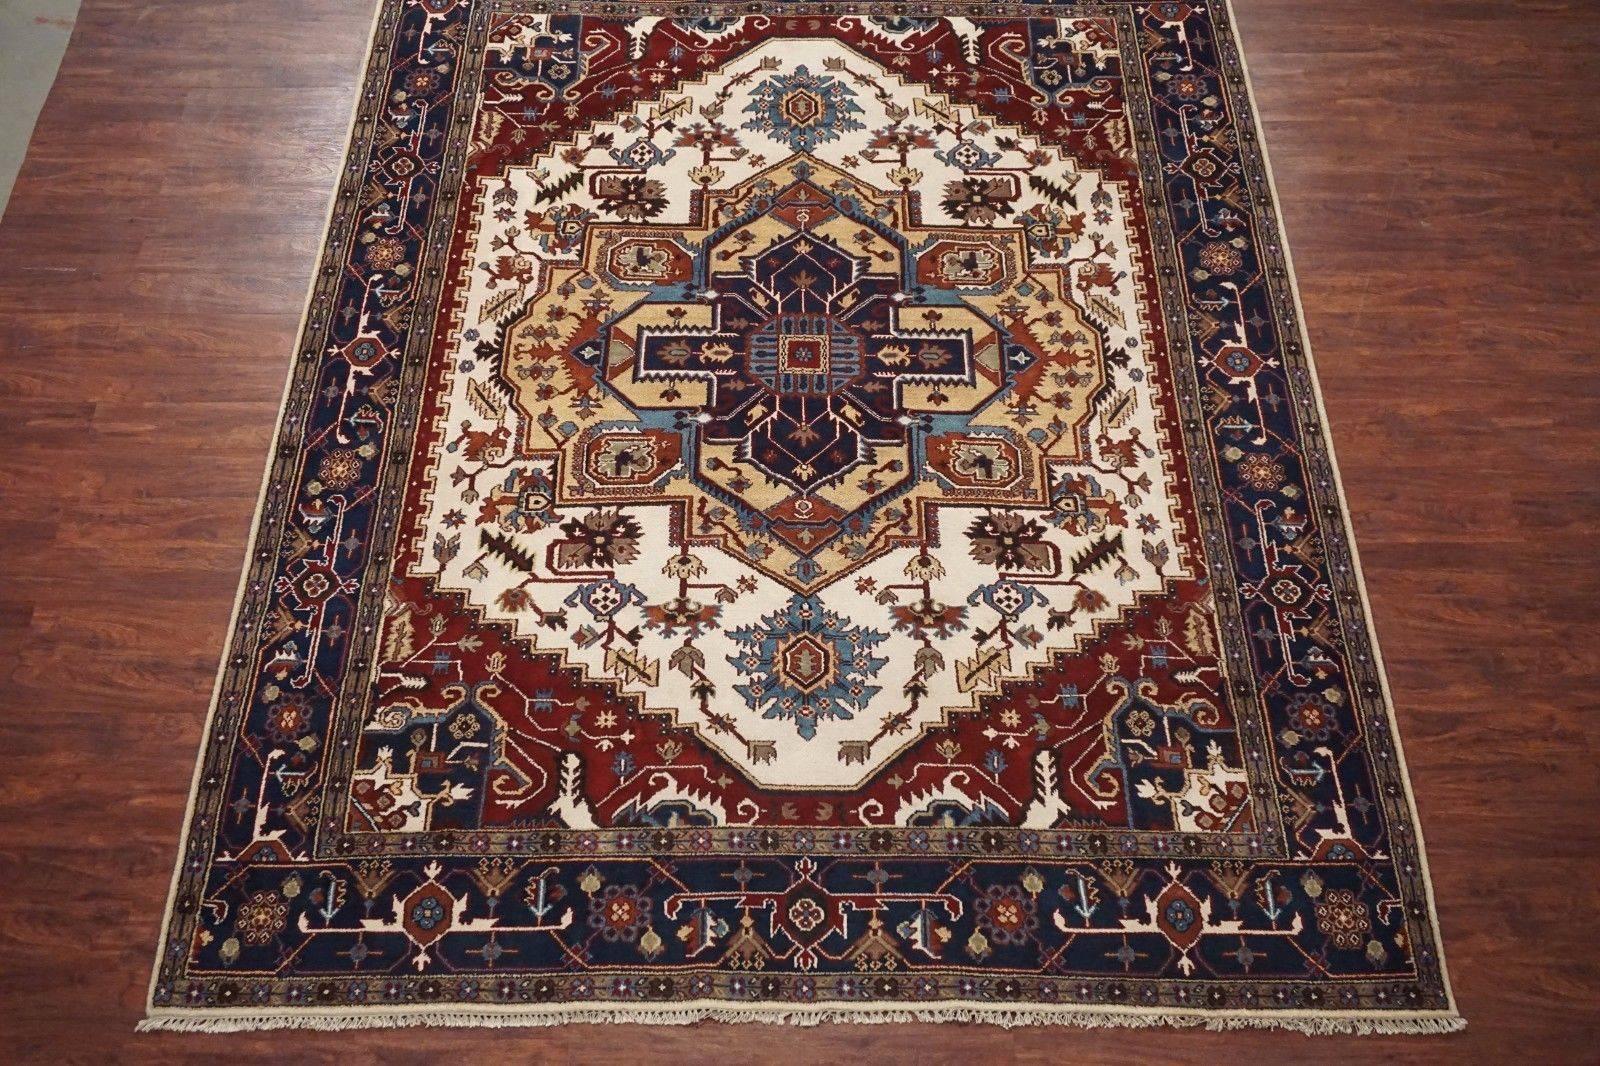 Ivory vegetable dyed wool Serapi rug

2015

Measures: 9' x 11' 11